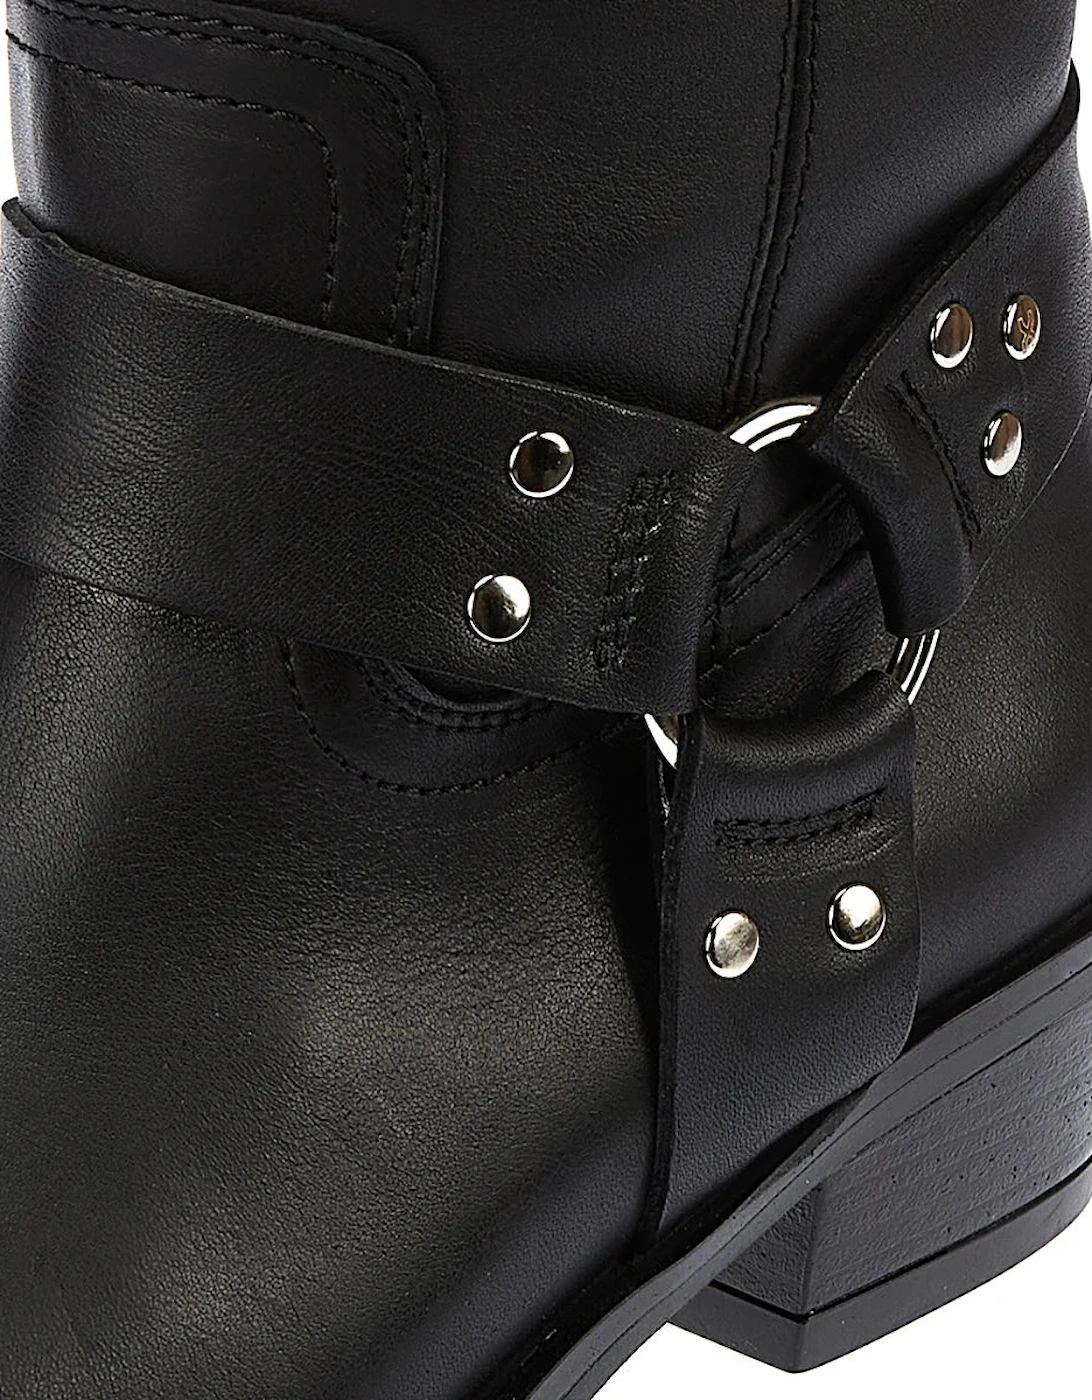 Trig-Ger Women's Black Boots